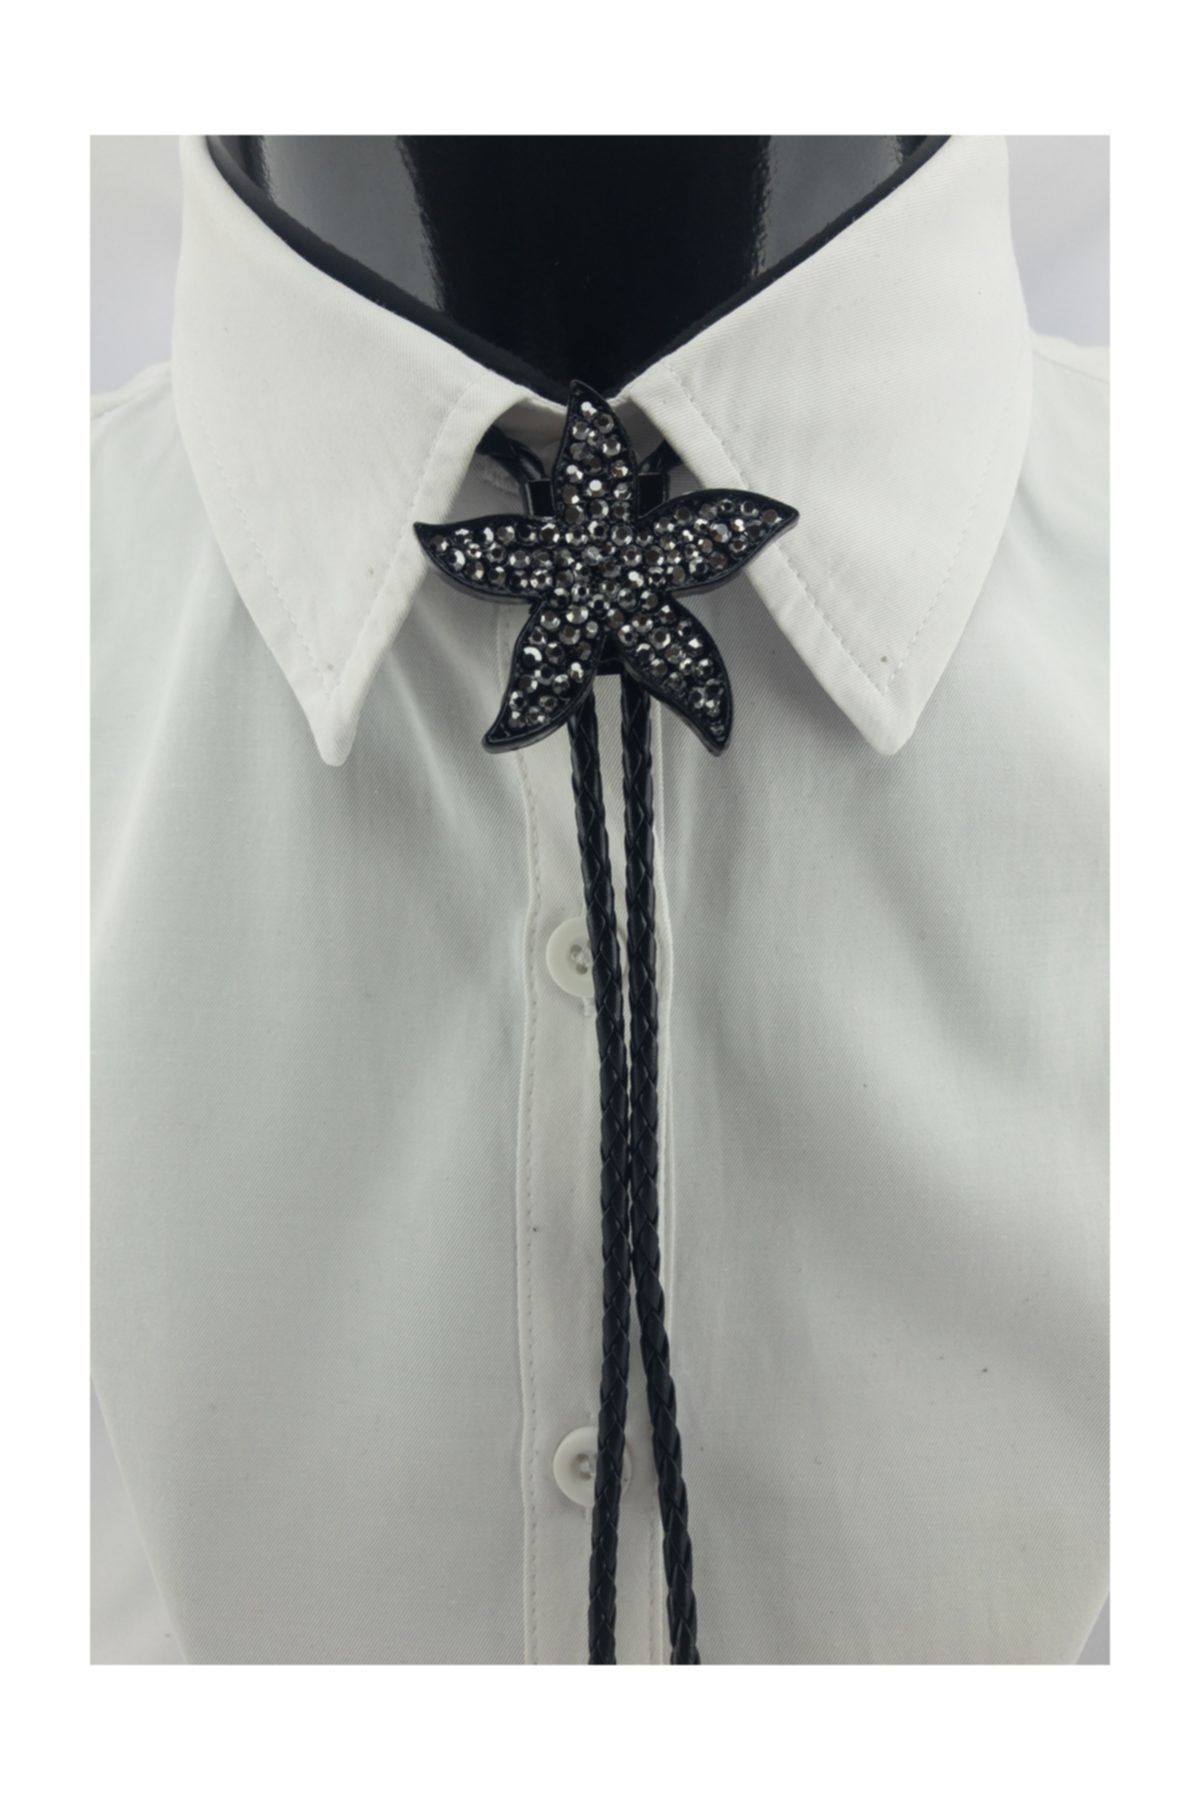 Zaim Aksesuar Taşlı Kovboy Kravatı ( Bolo Kravat)